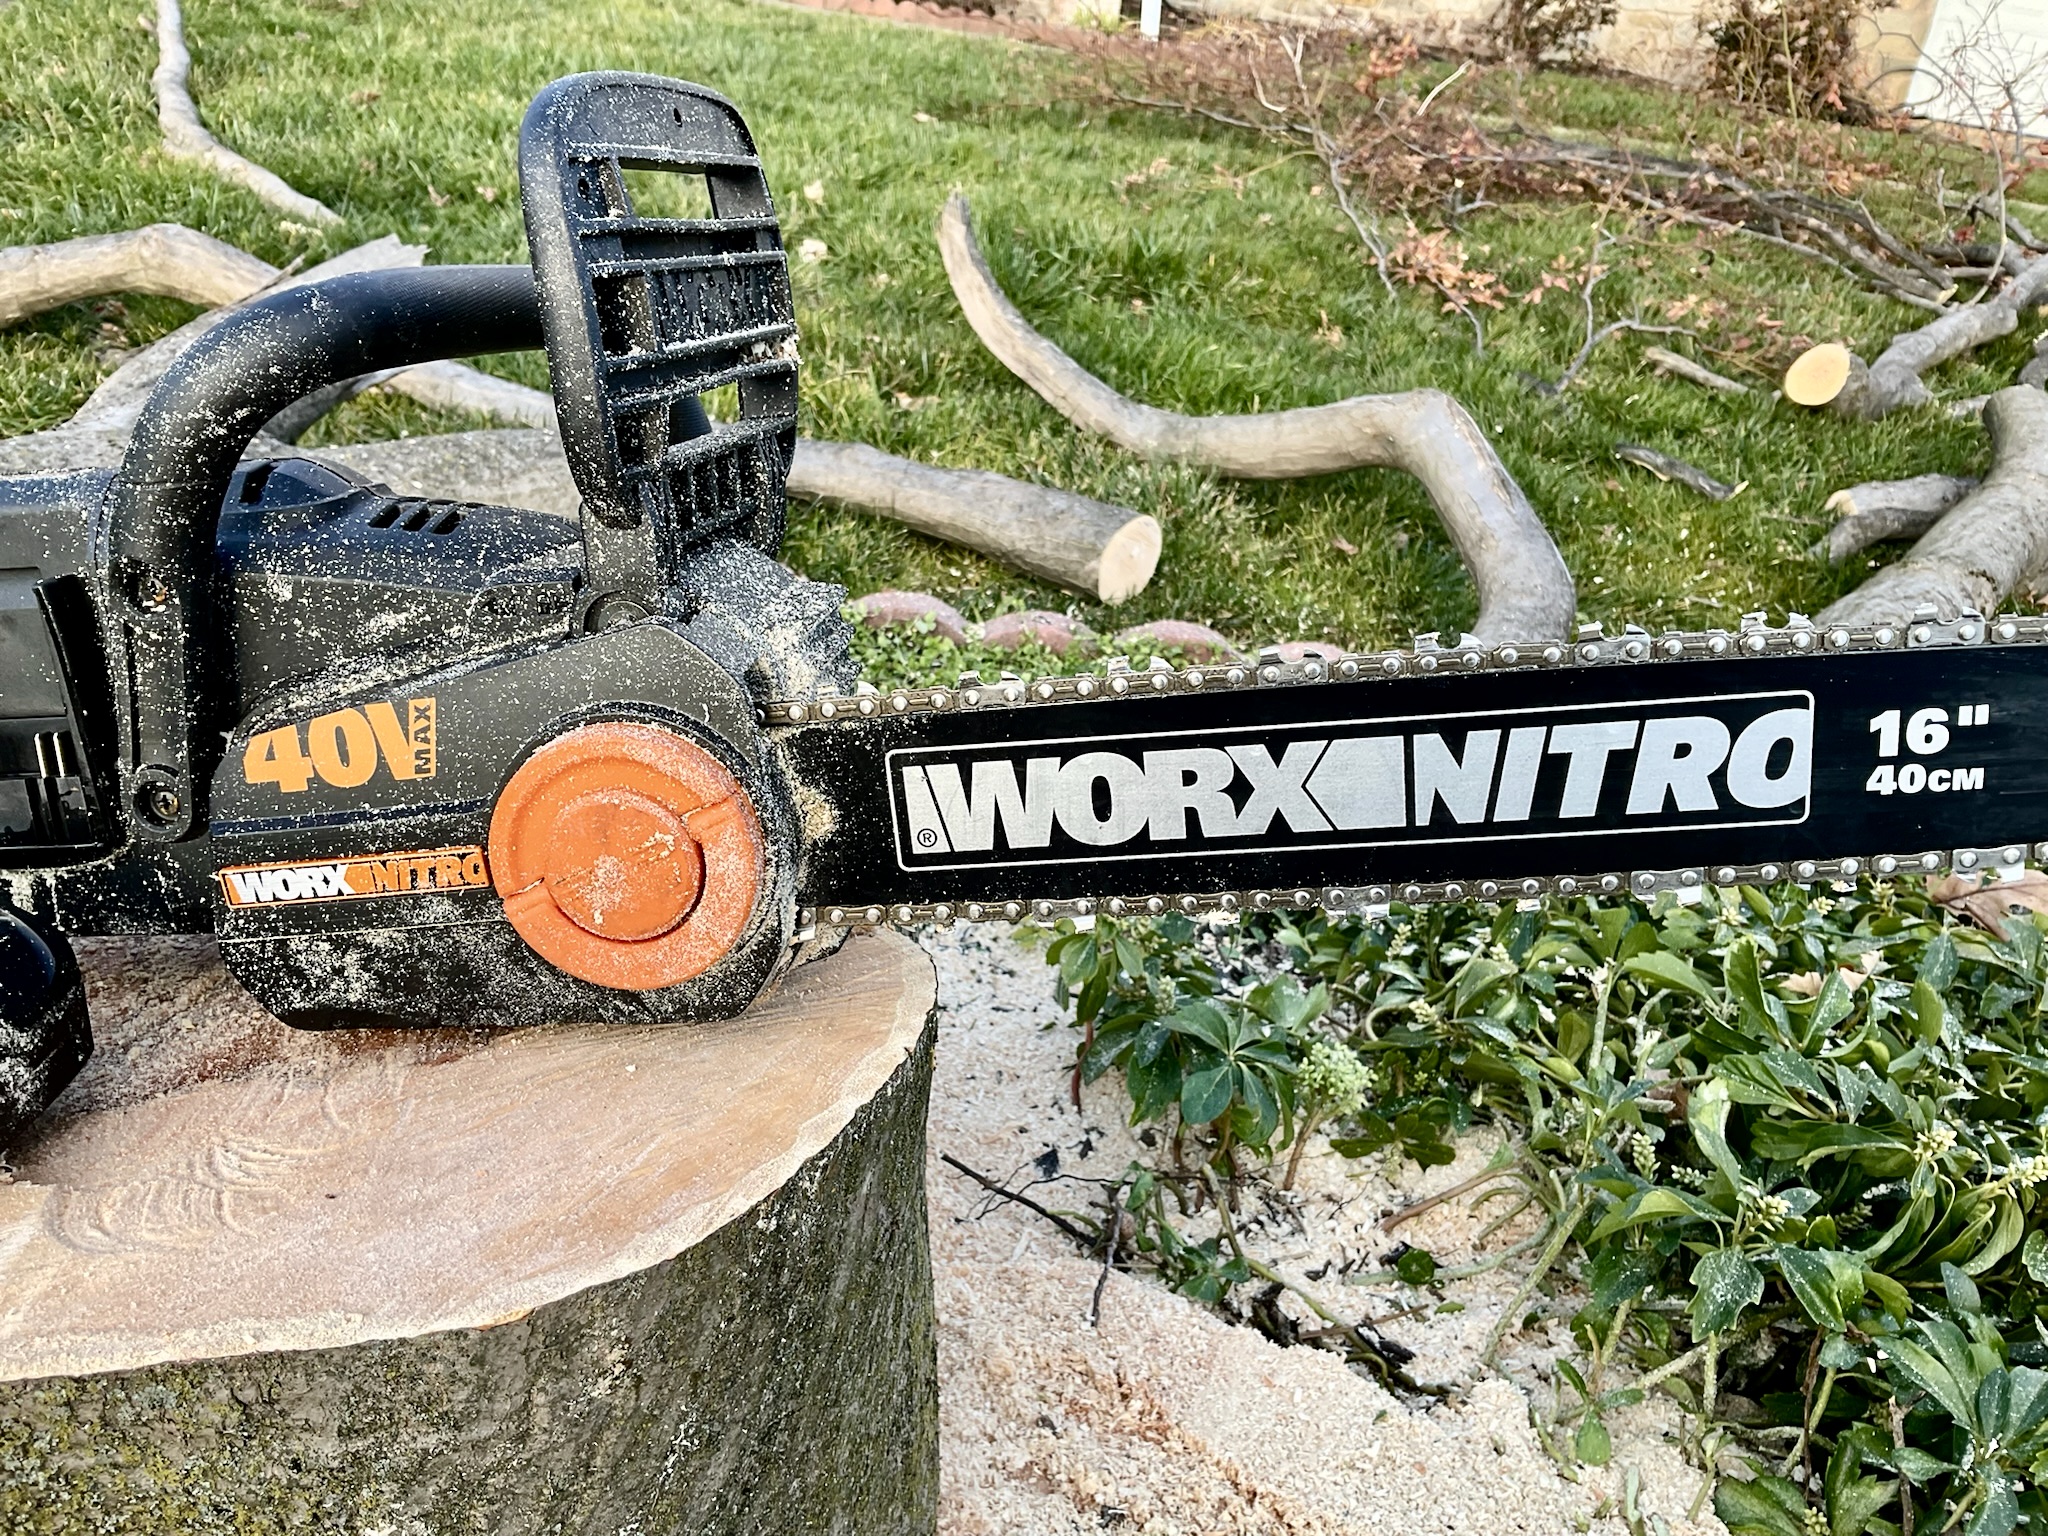 Tool Review: Worx Nitro 16-inch 40-volt Chainsaw - MyFixitUpLife